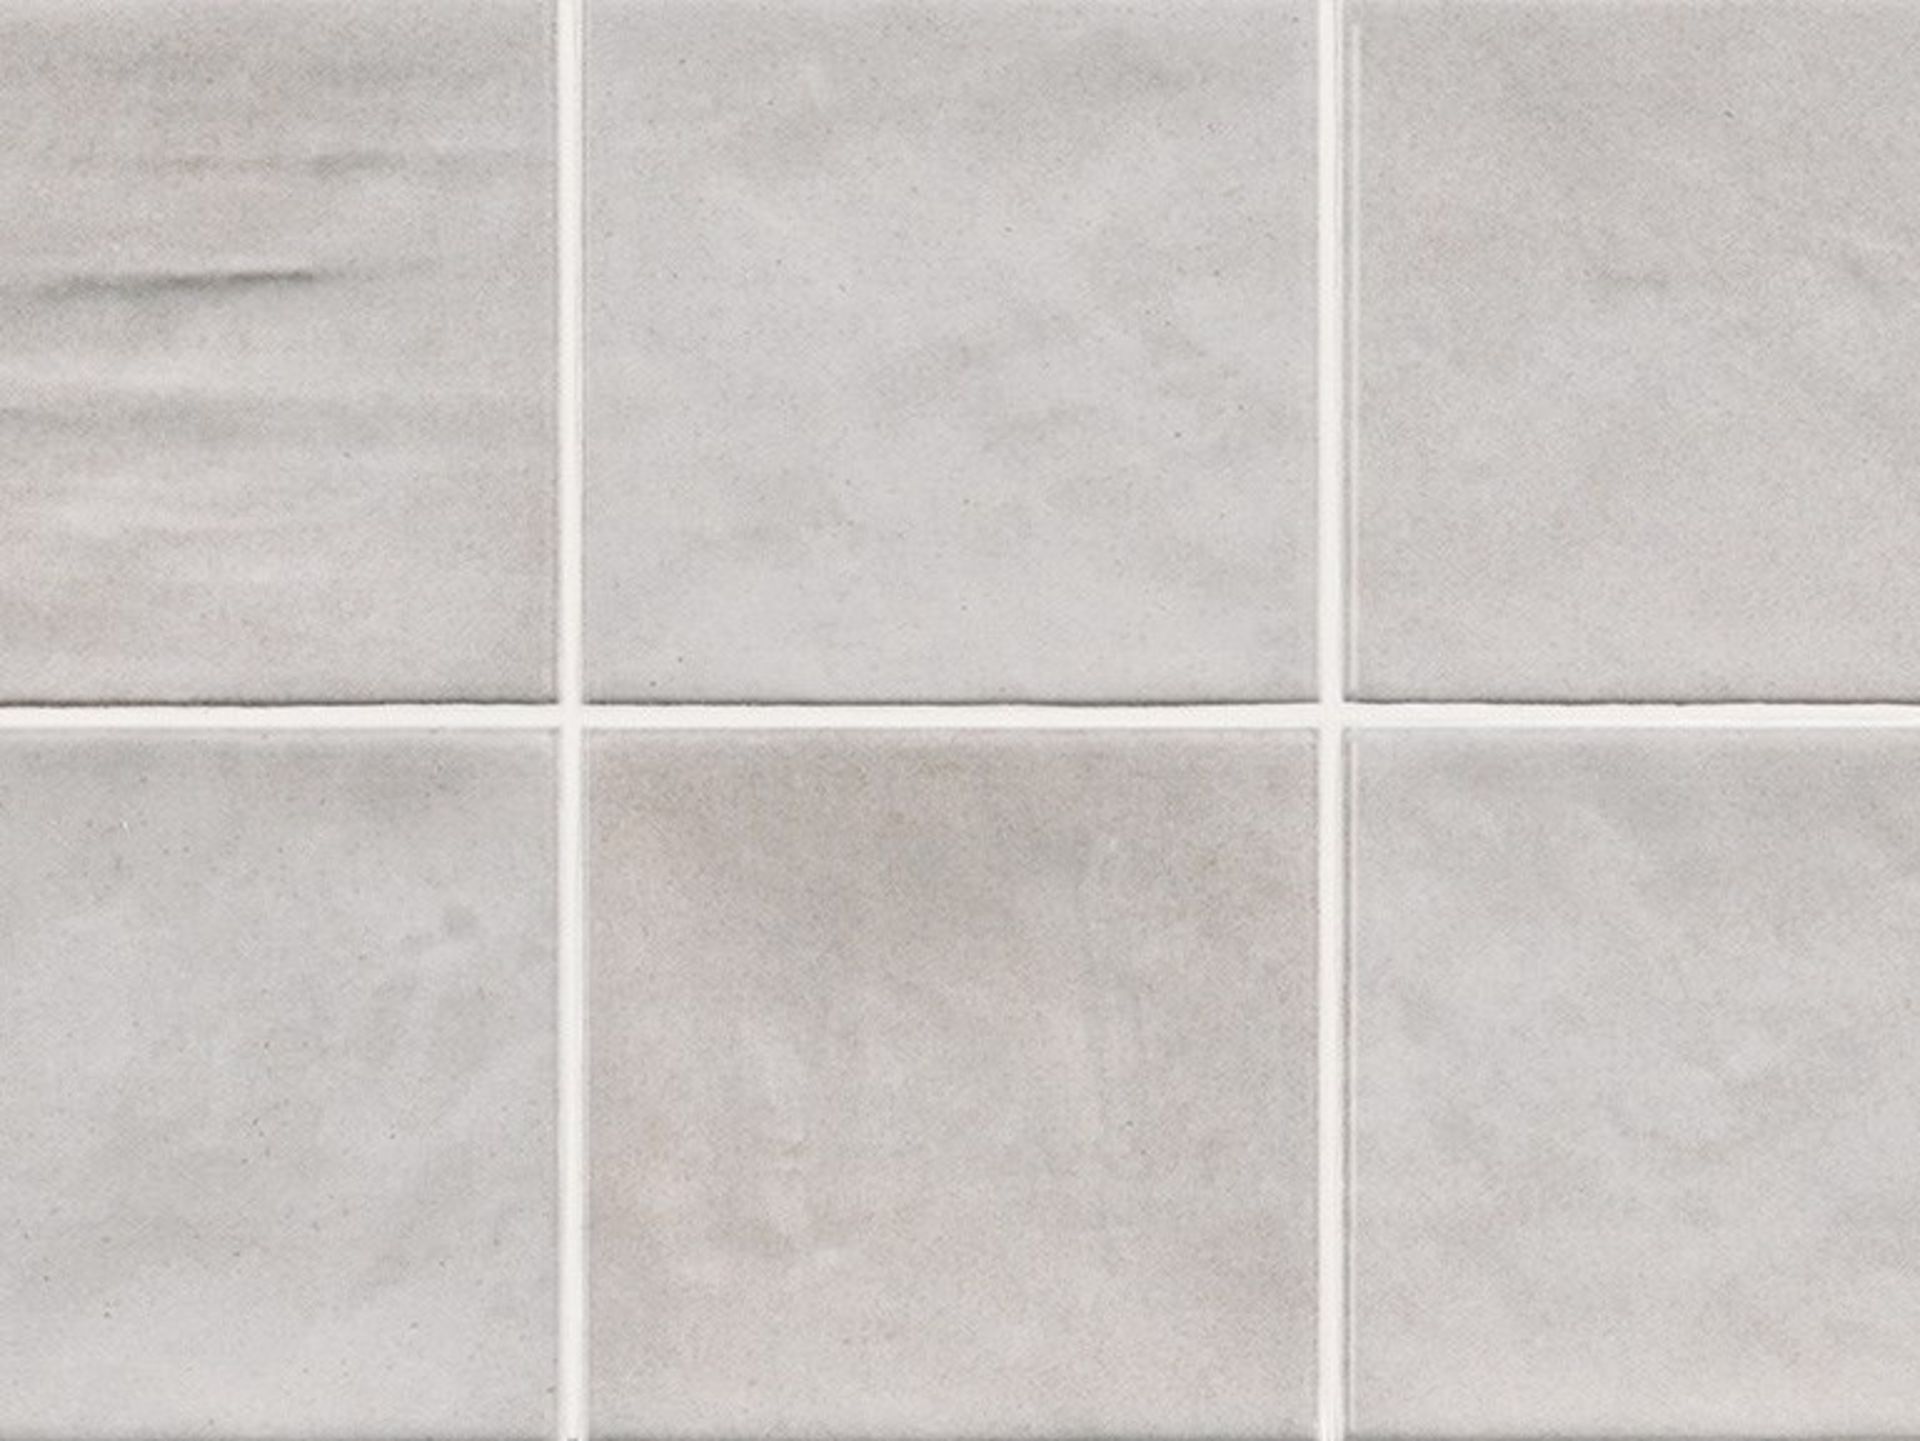 New 9.12 Procelanosa Ronda Grey Feature Tiles.20x31.6Cm Per Tile. 1.14M2 Per Pack.Beyond Its W... - Image 2 of 2